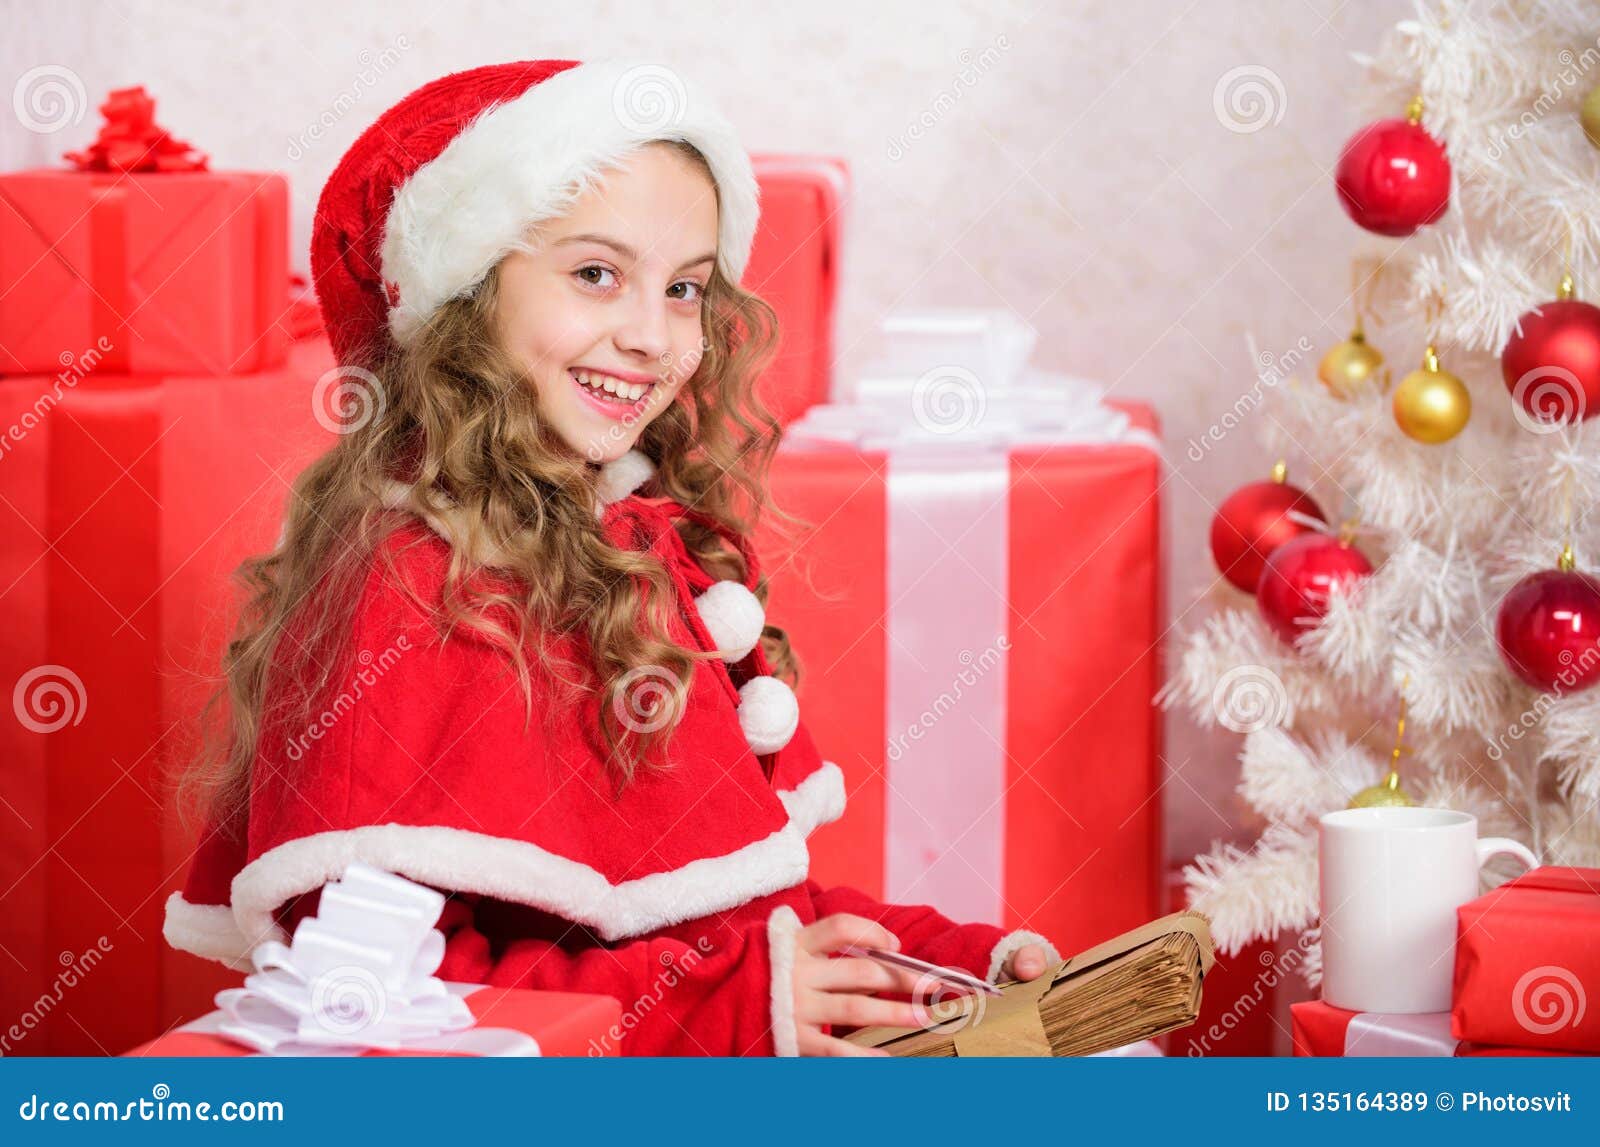 Christmas Ornament Santa Claus Holding Small Tree